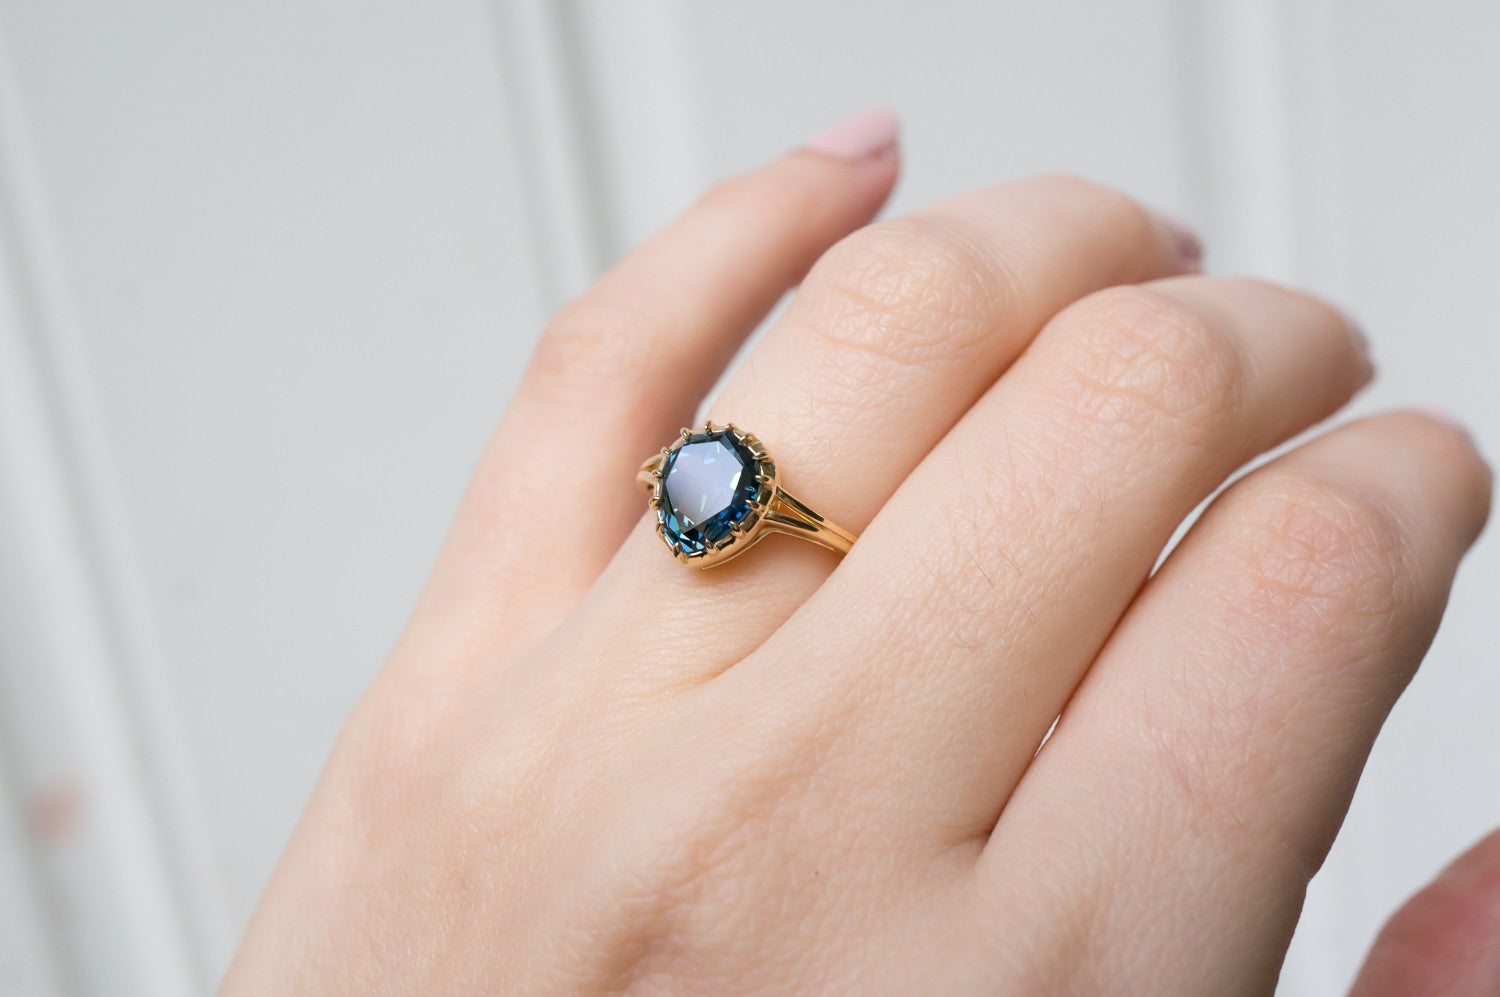 Bespoke Georgian Inspired Ring with a Custom Cut Sapphire - S. Kind & Co